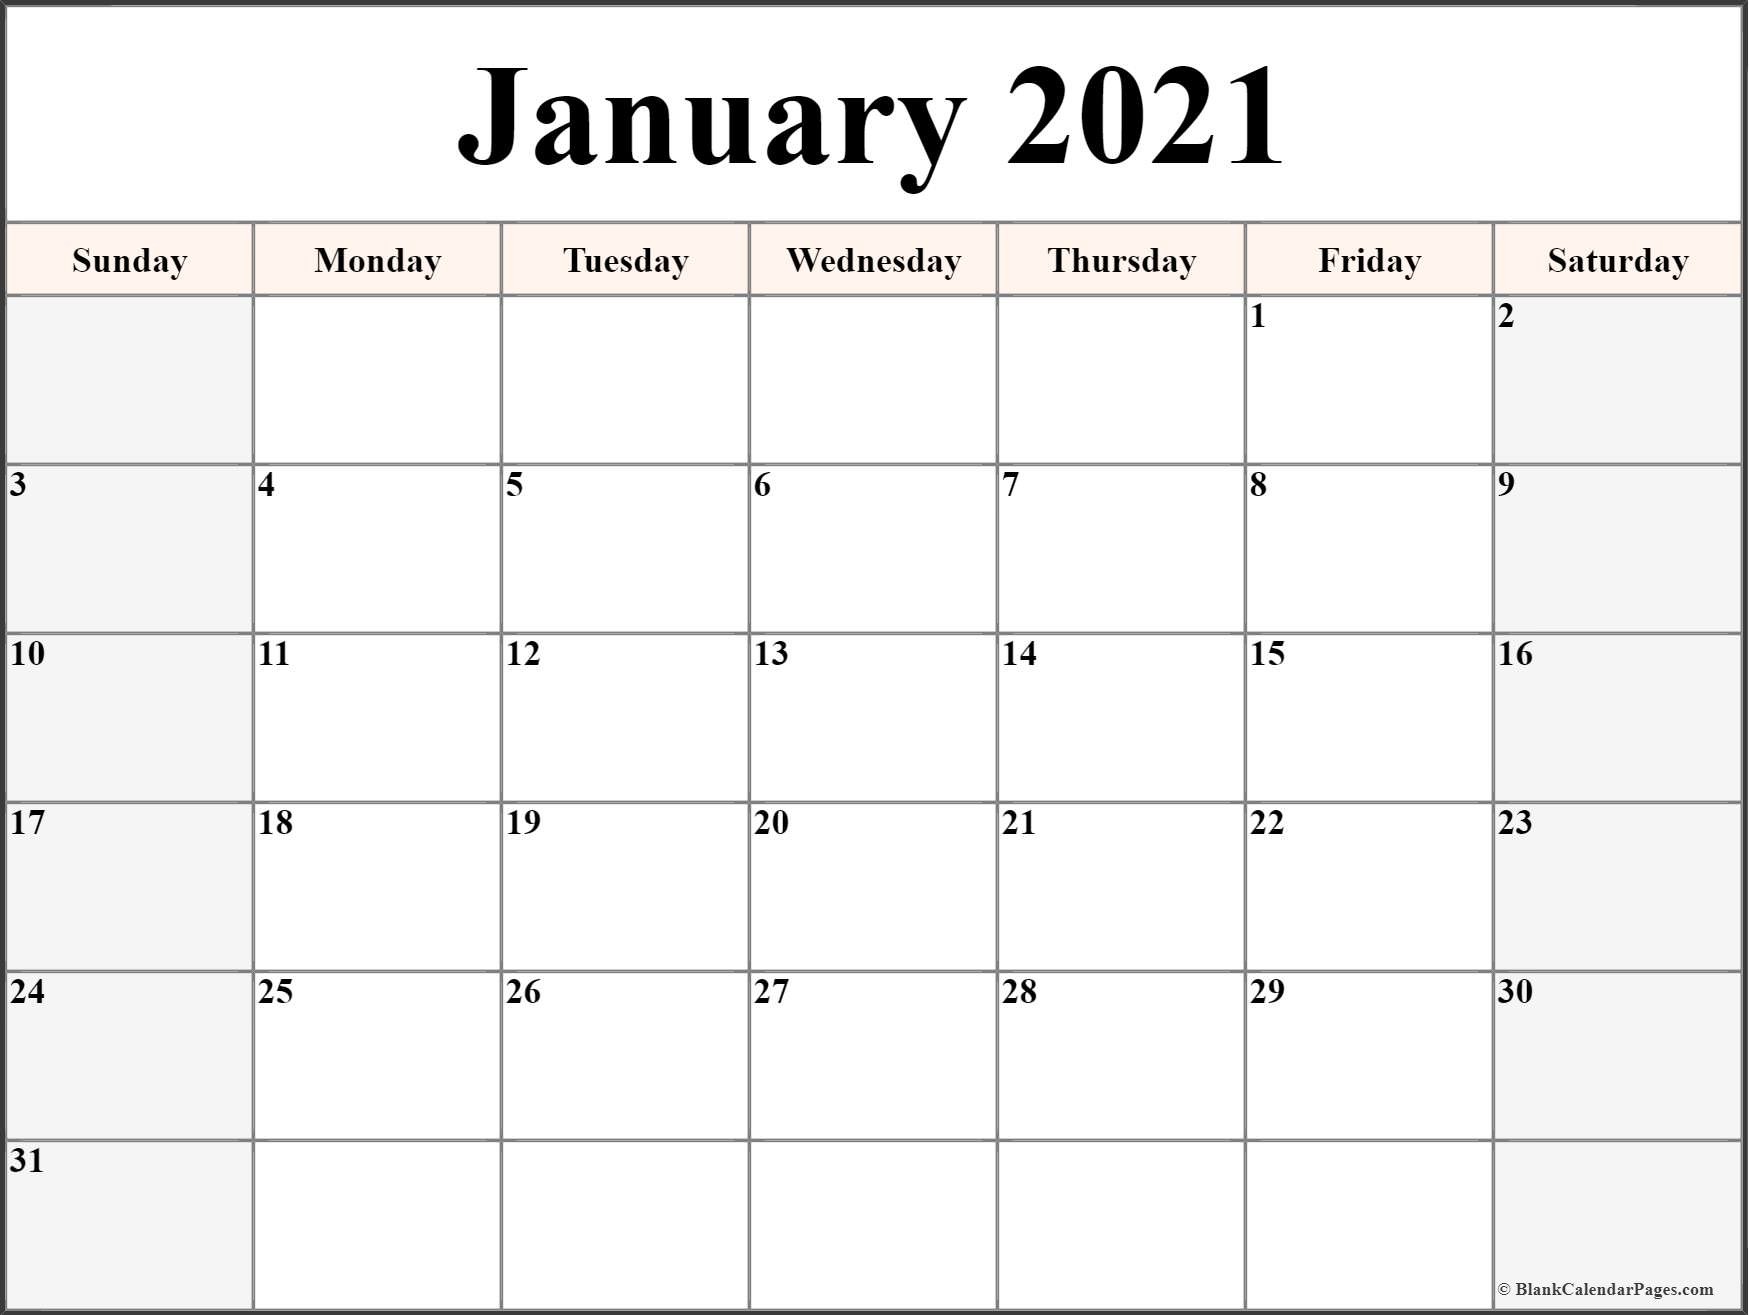 January 2021 calendar